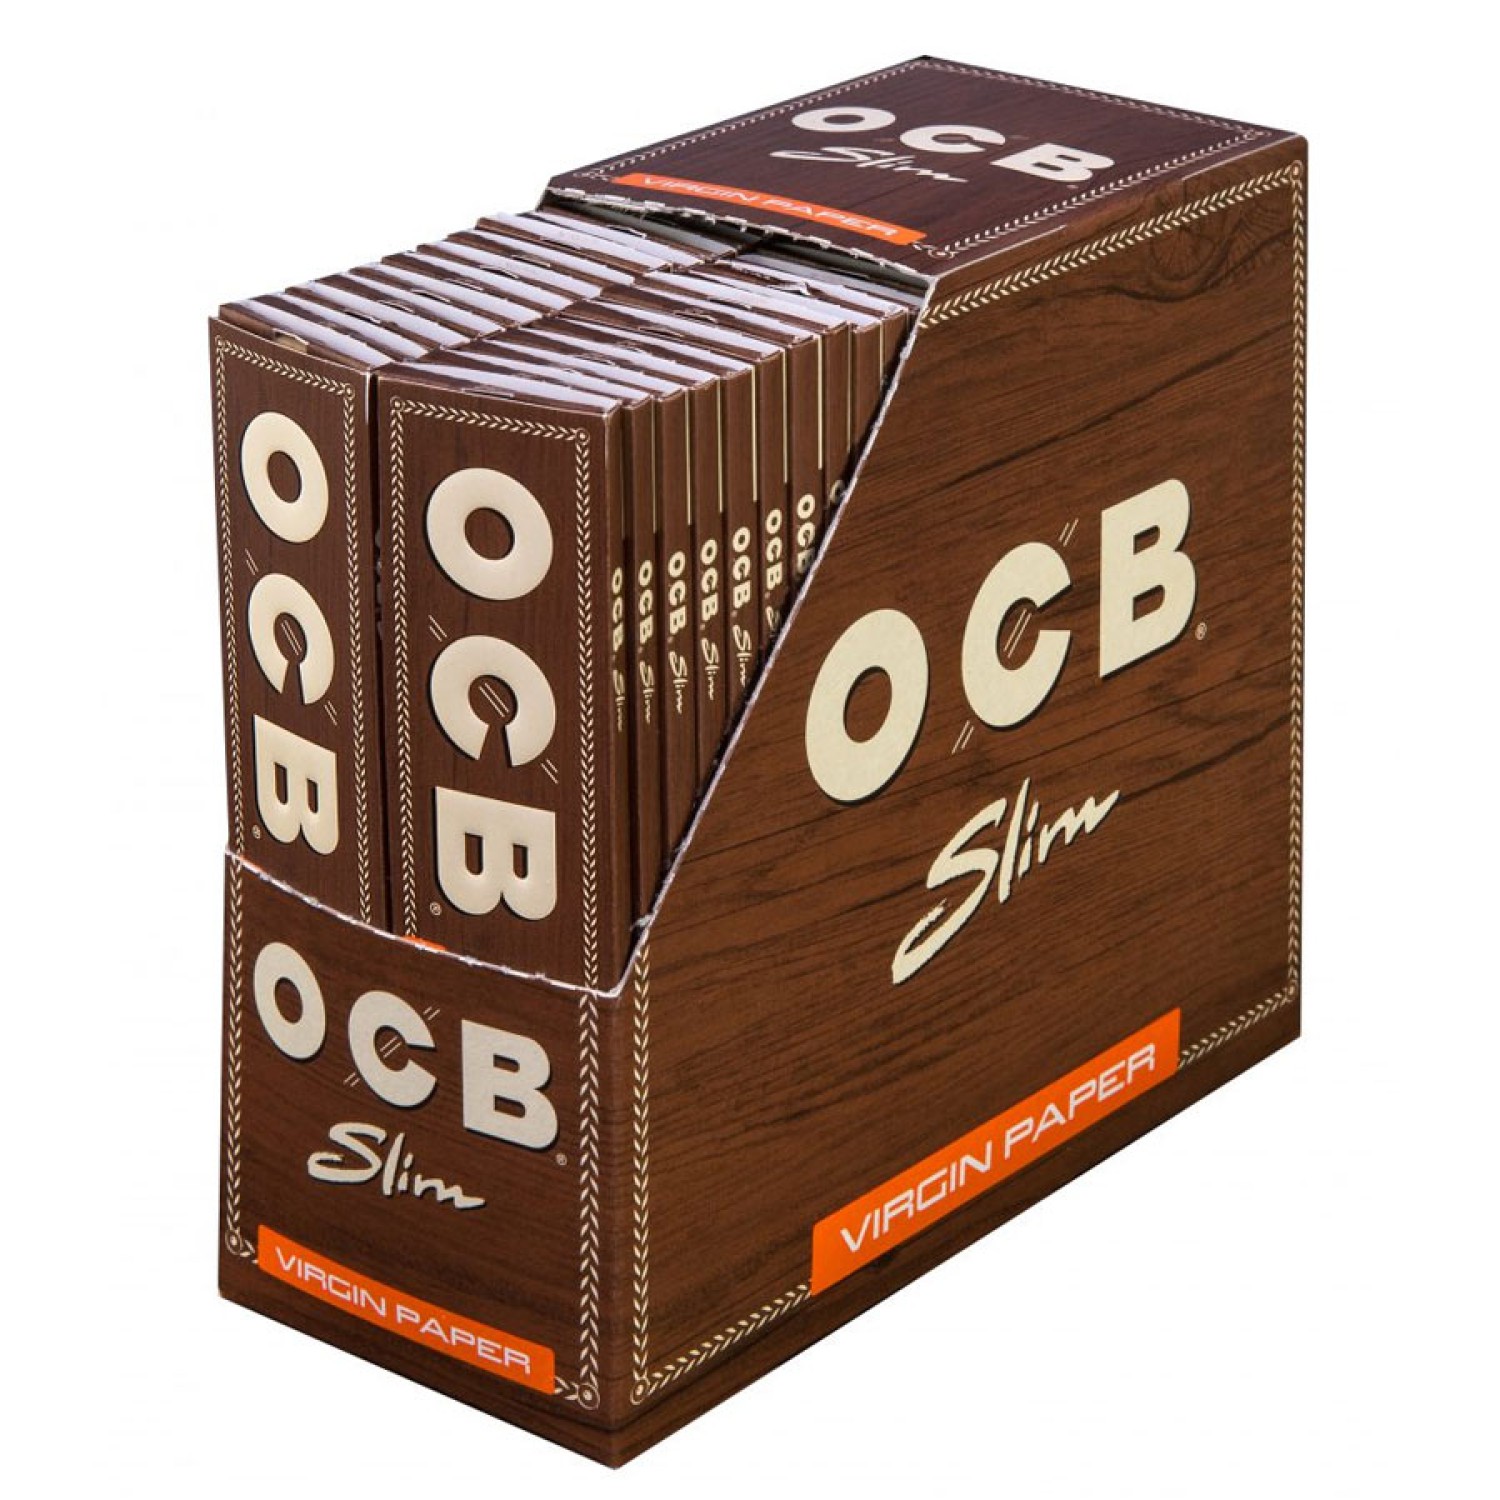 OCB Slim Braun KS Virgin Paper 50er Box